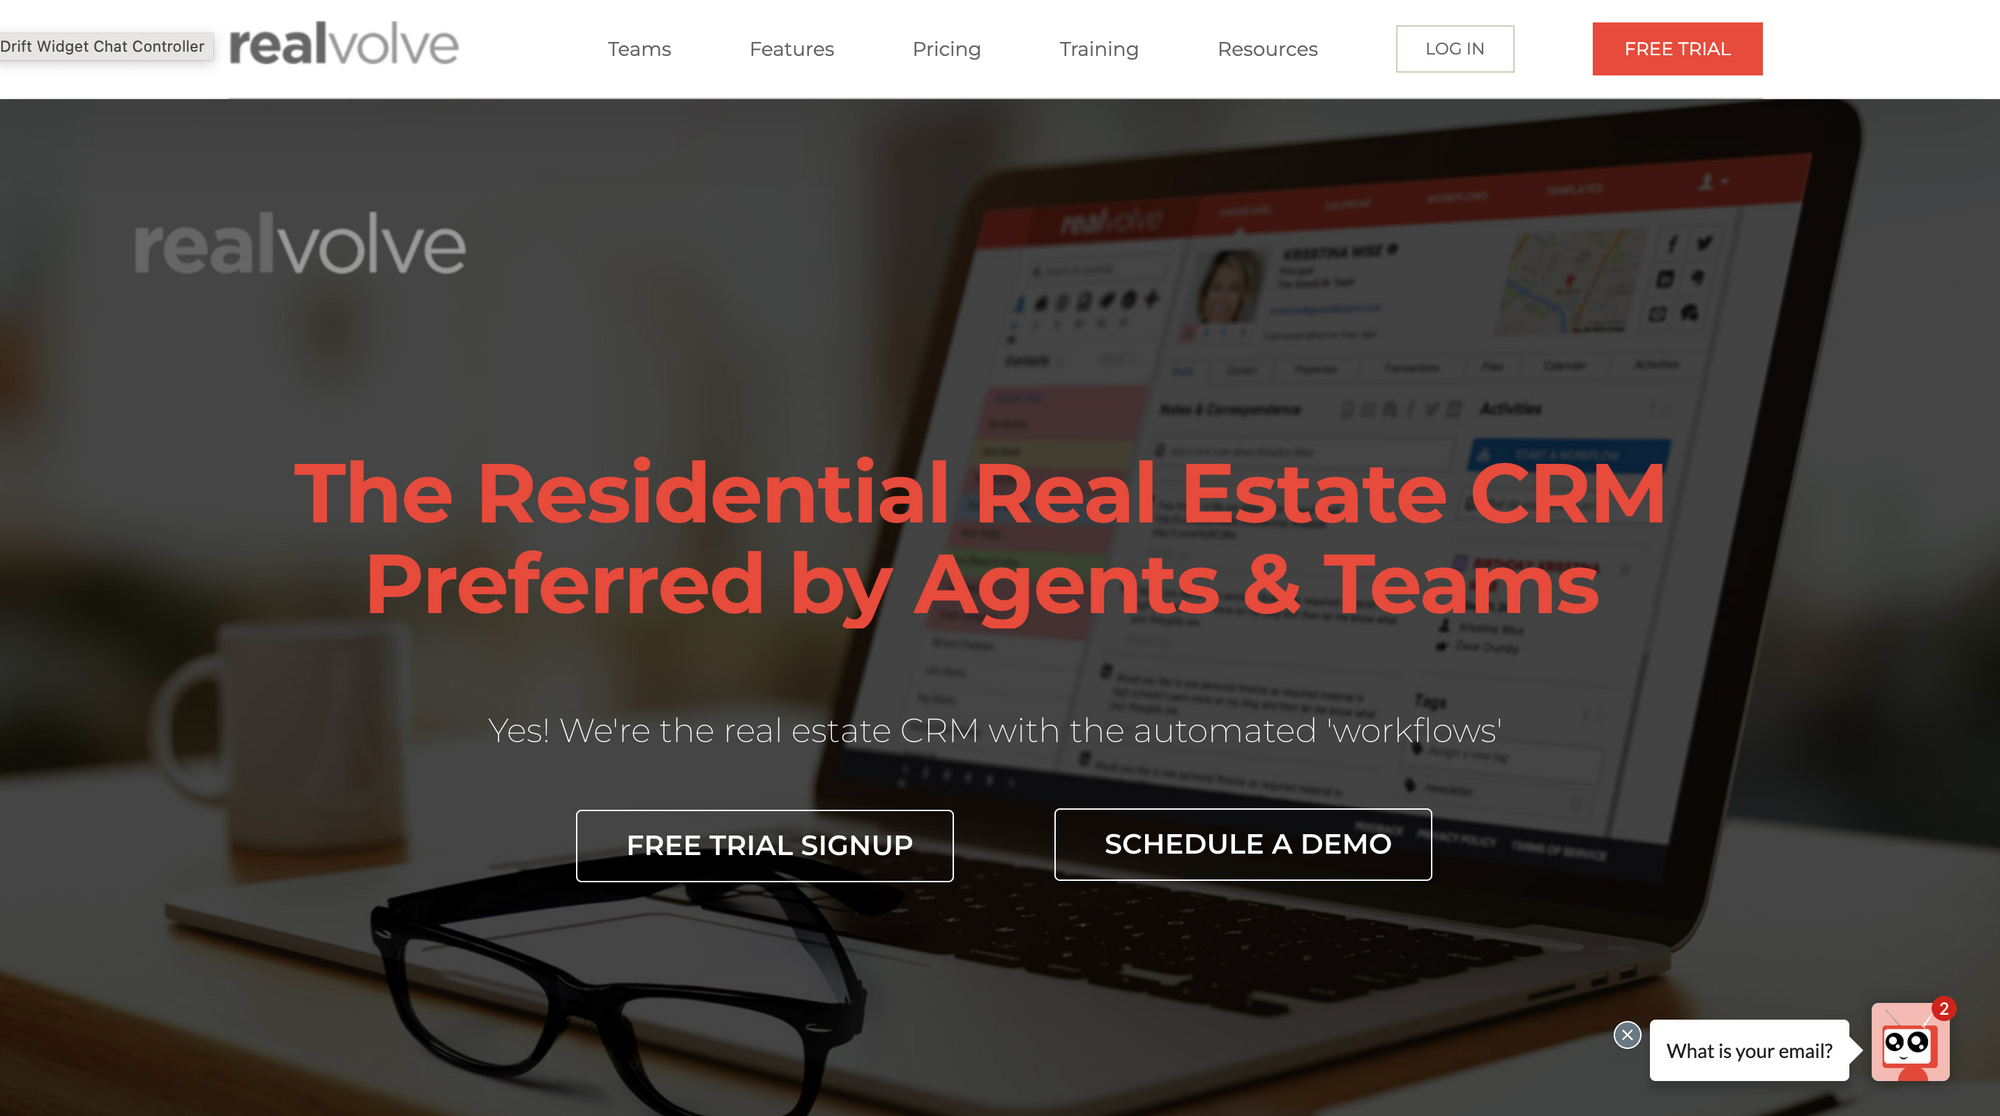 Realvolve: A real estate CRM